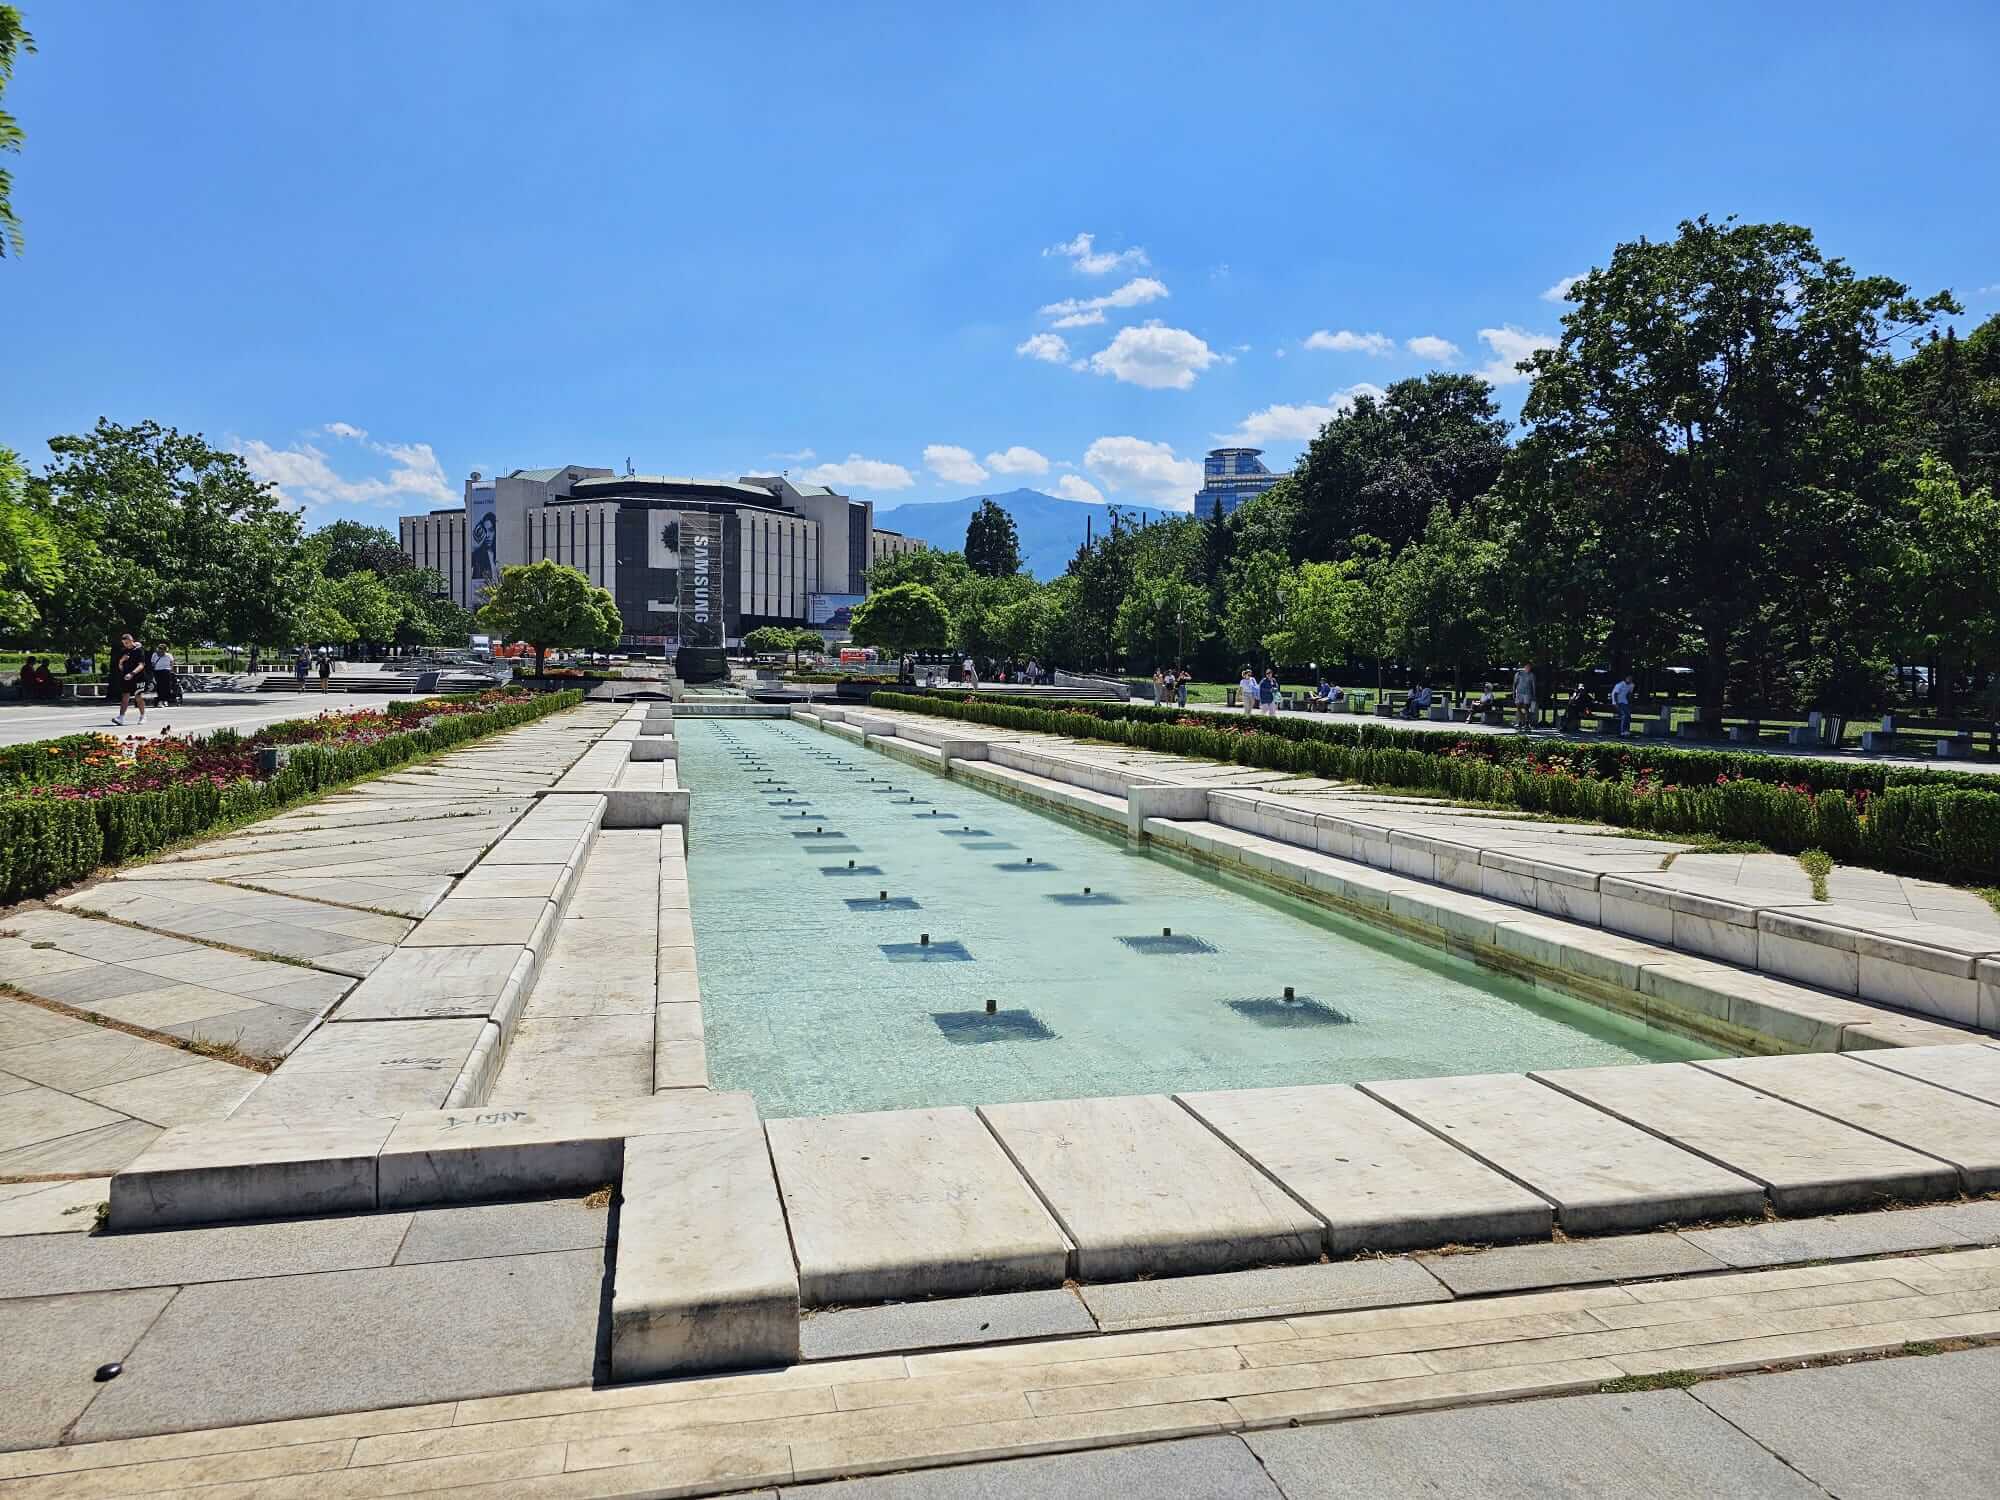 National Palace of Culture - Sofia